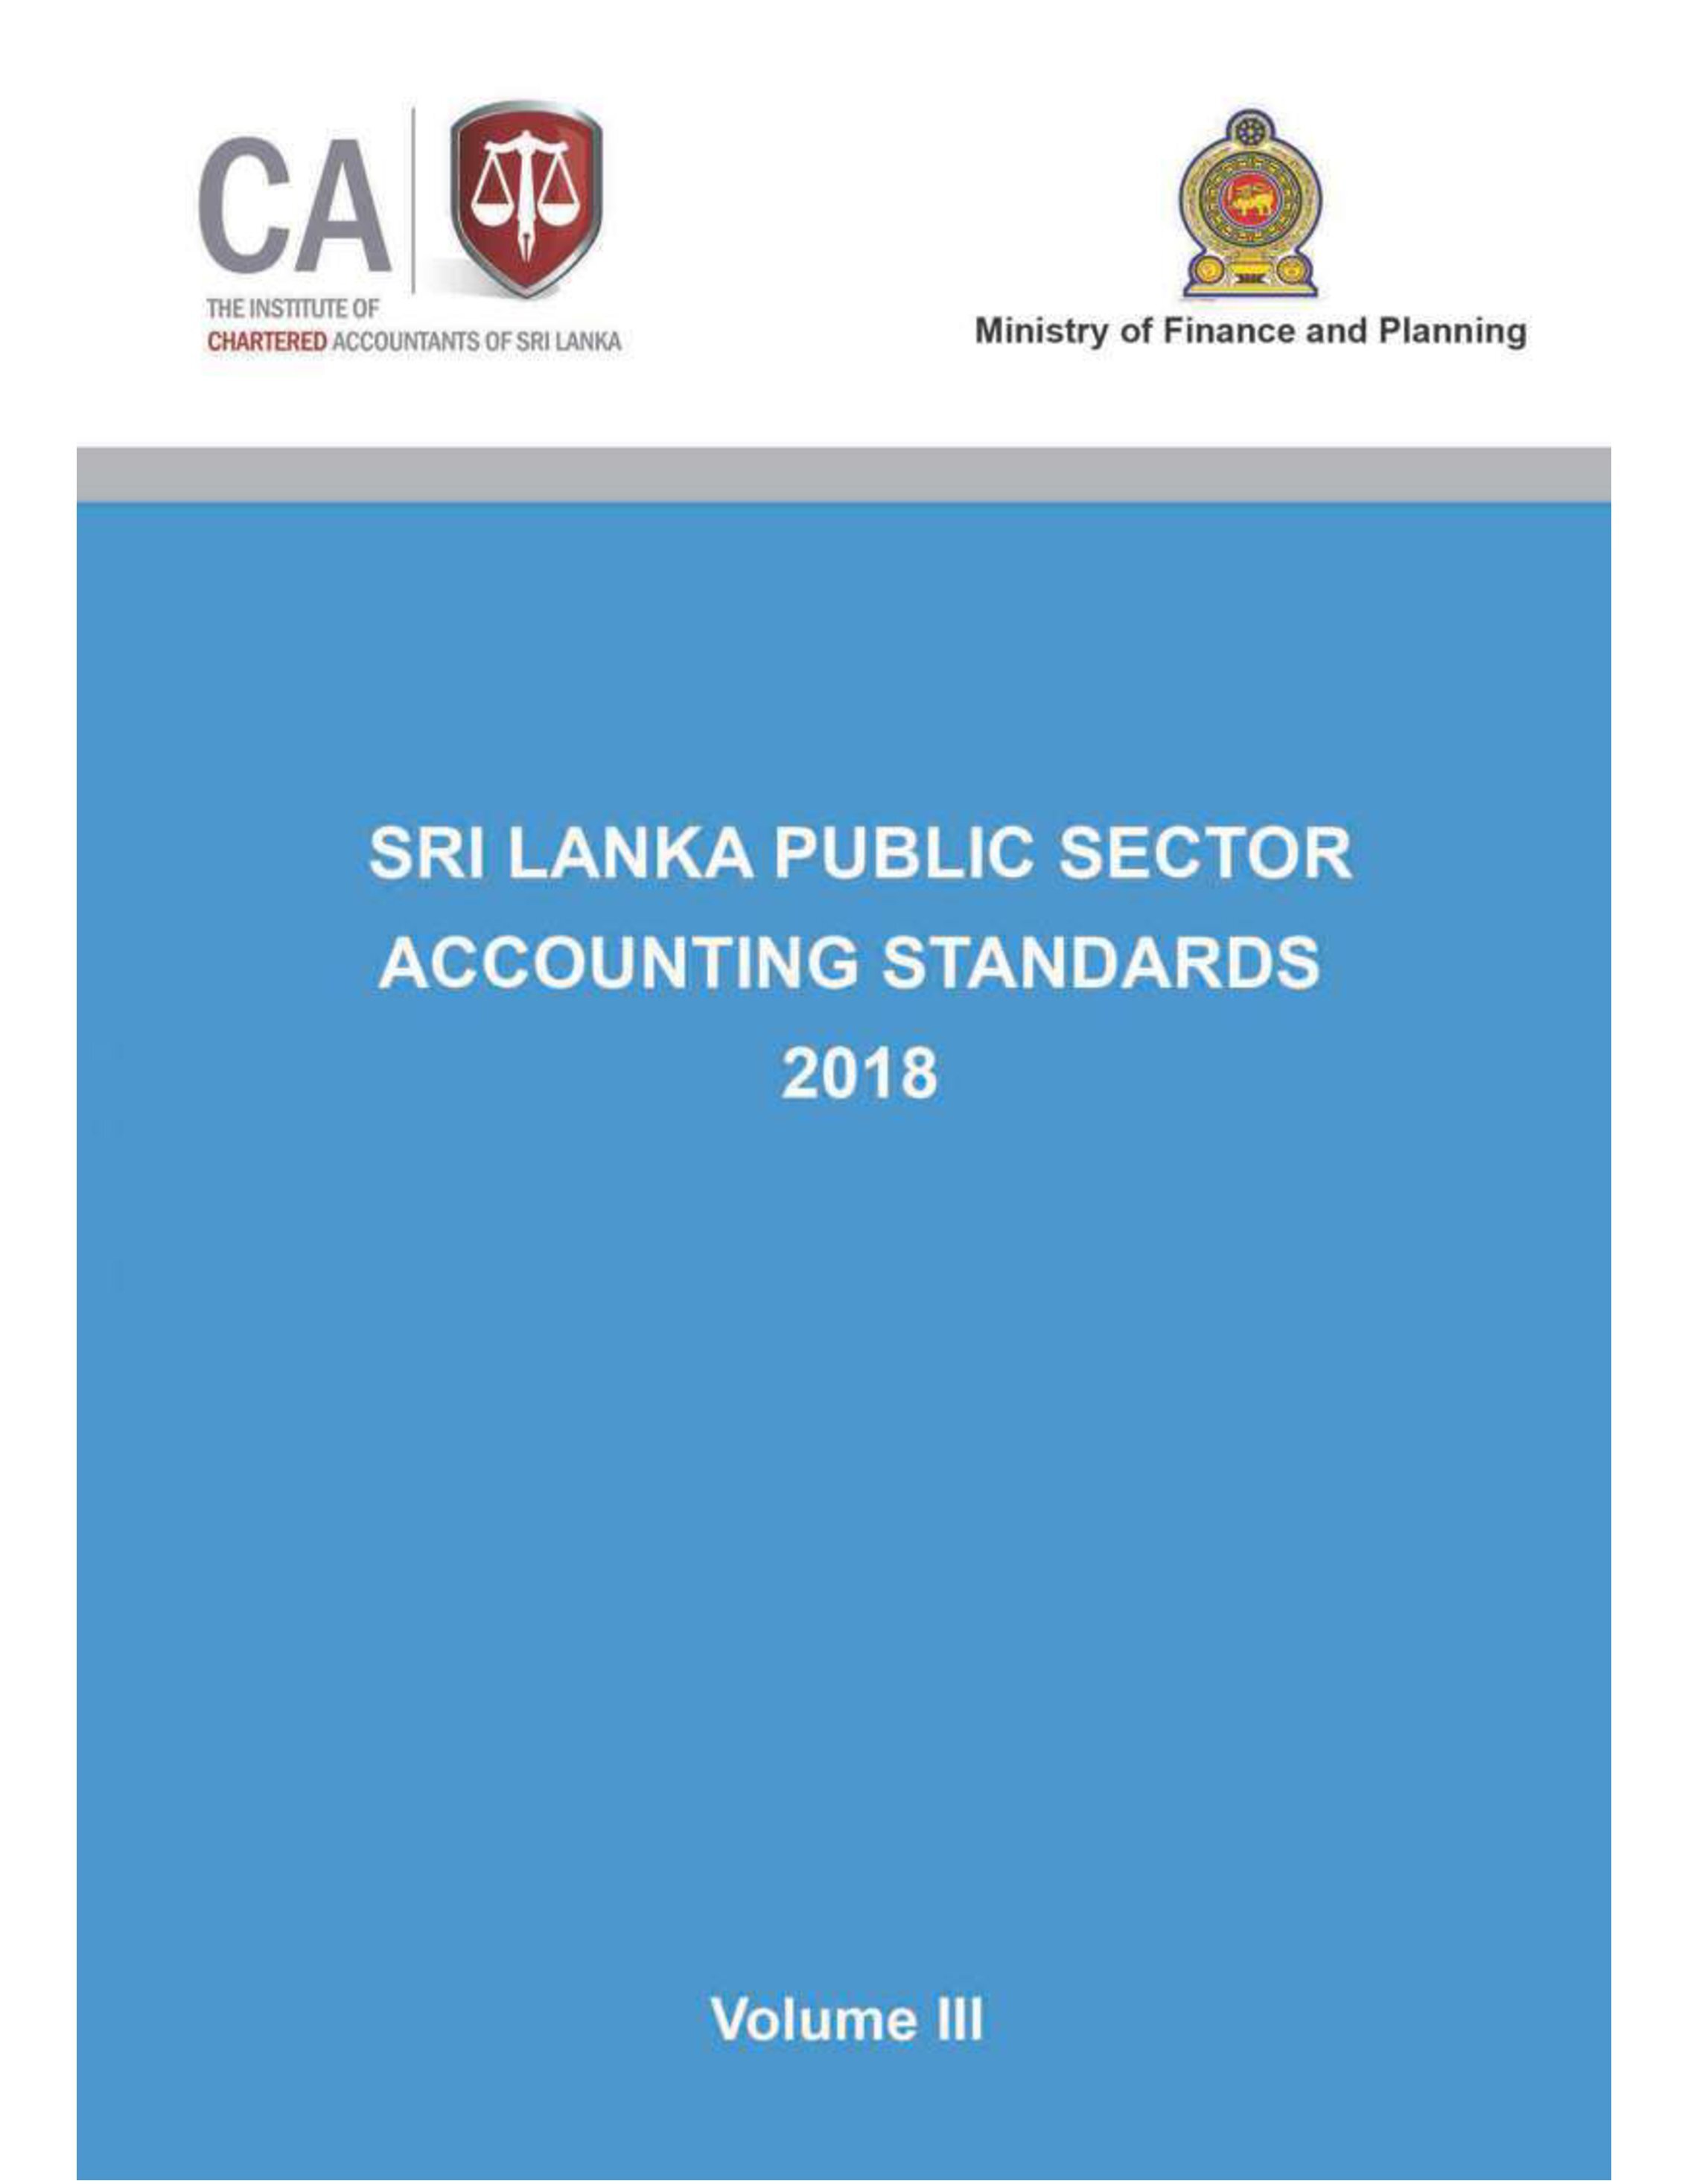 Sri Lanka Public Sector Accounting standards 2018 - Volume III